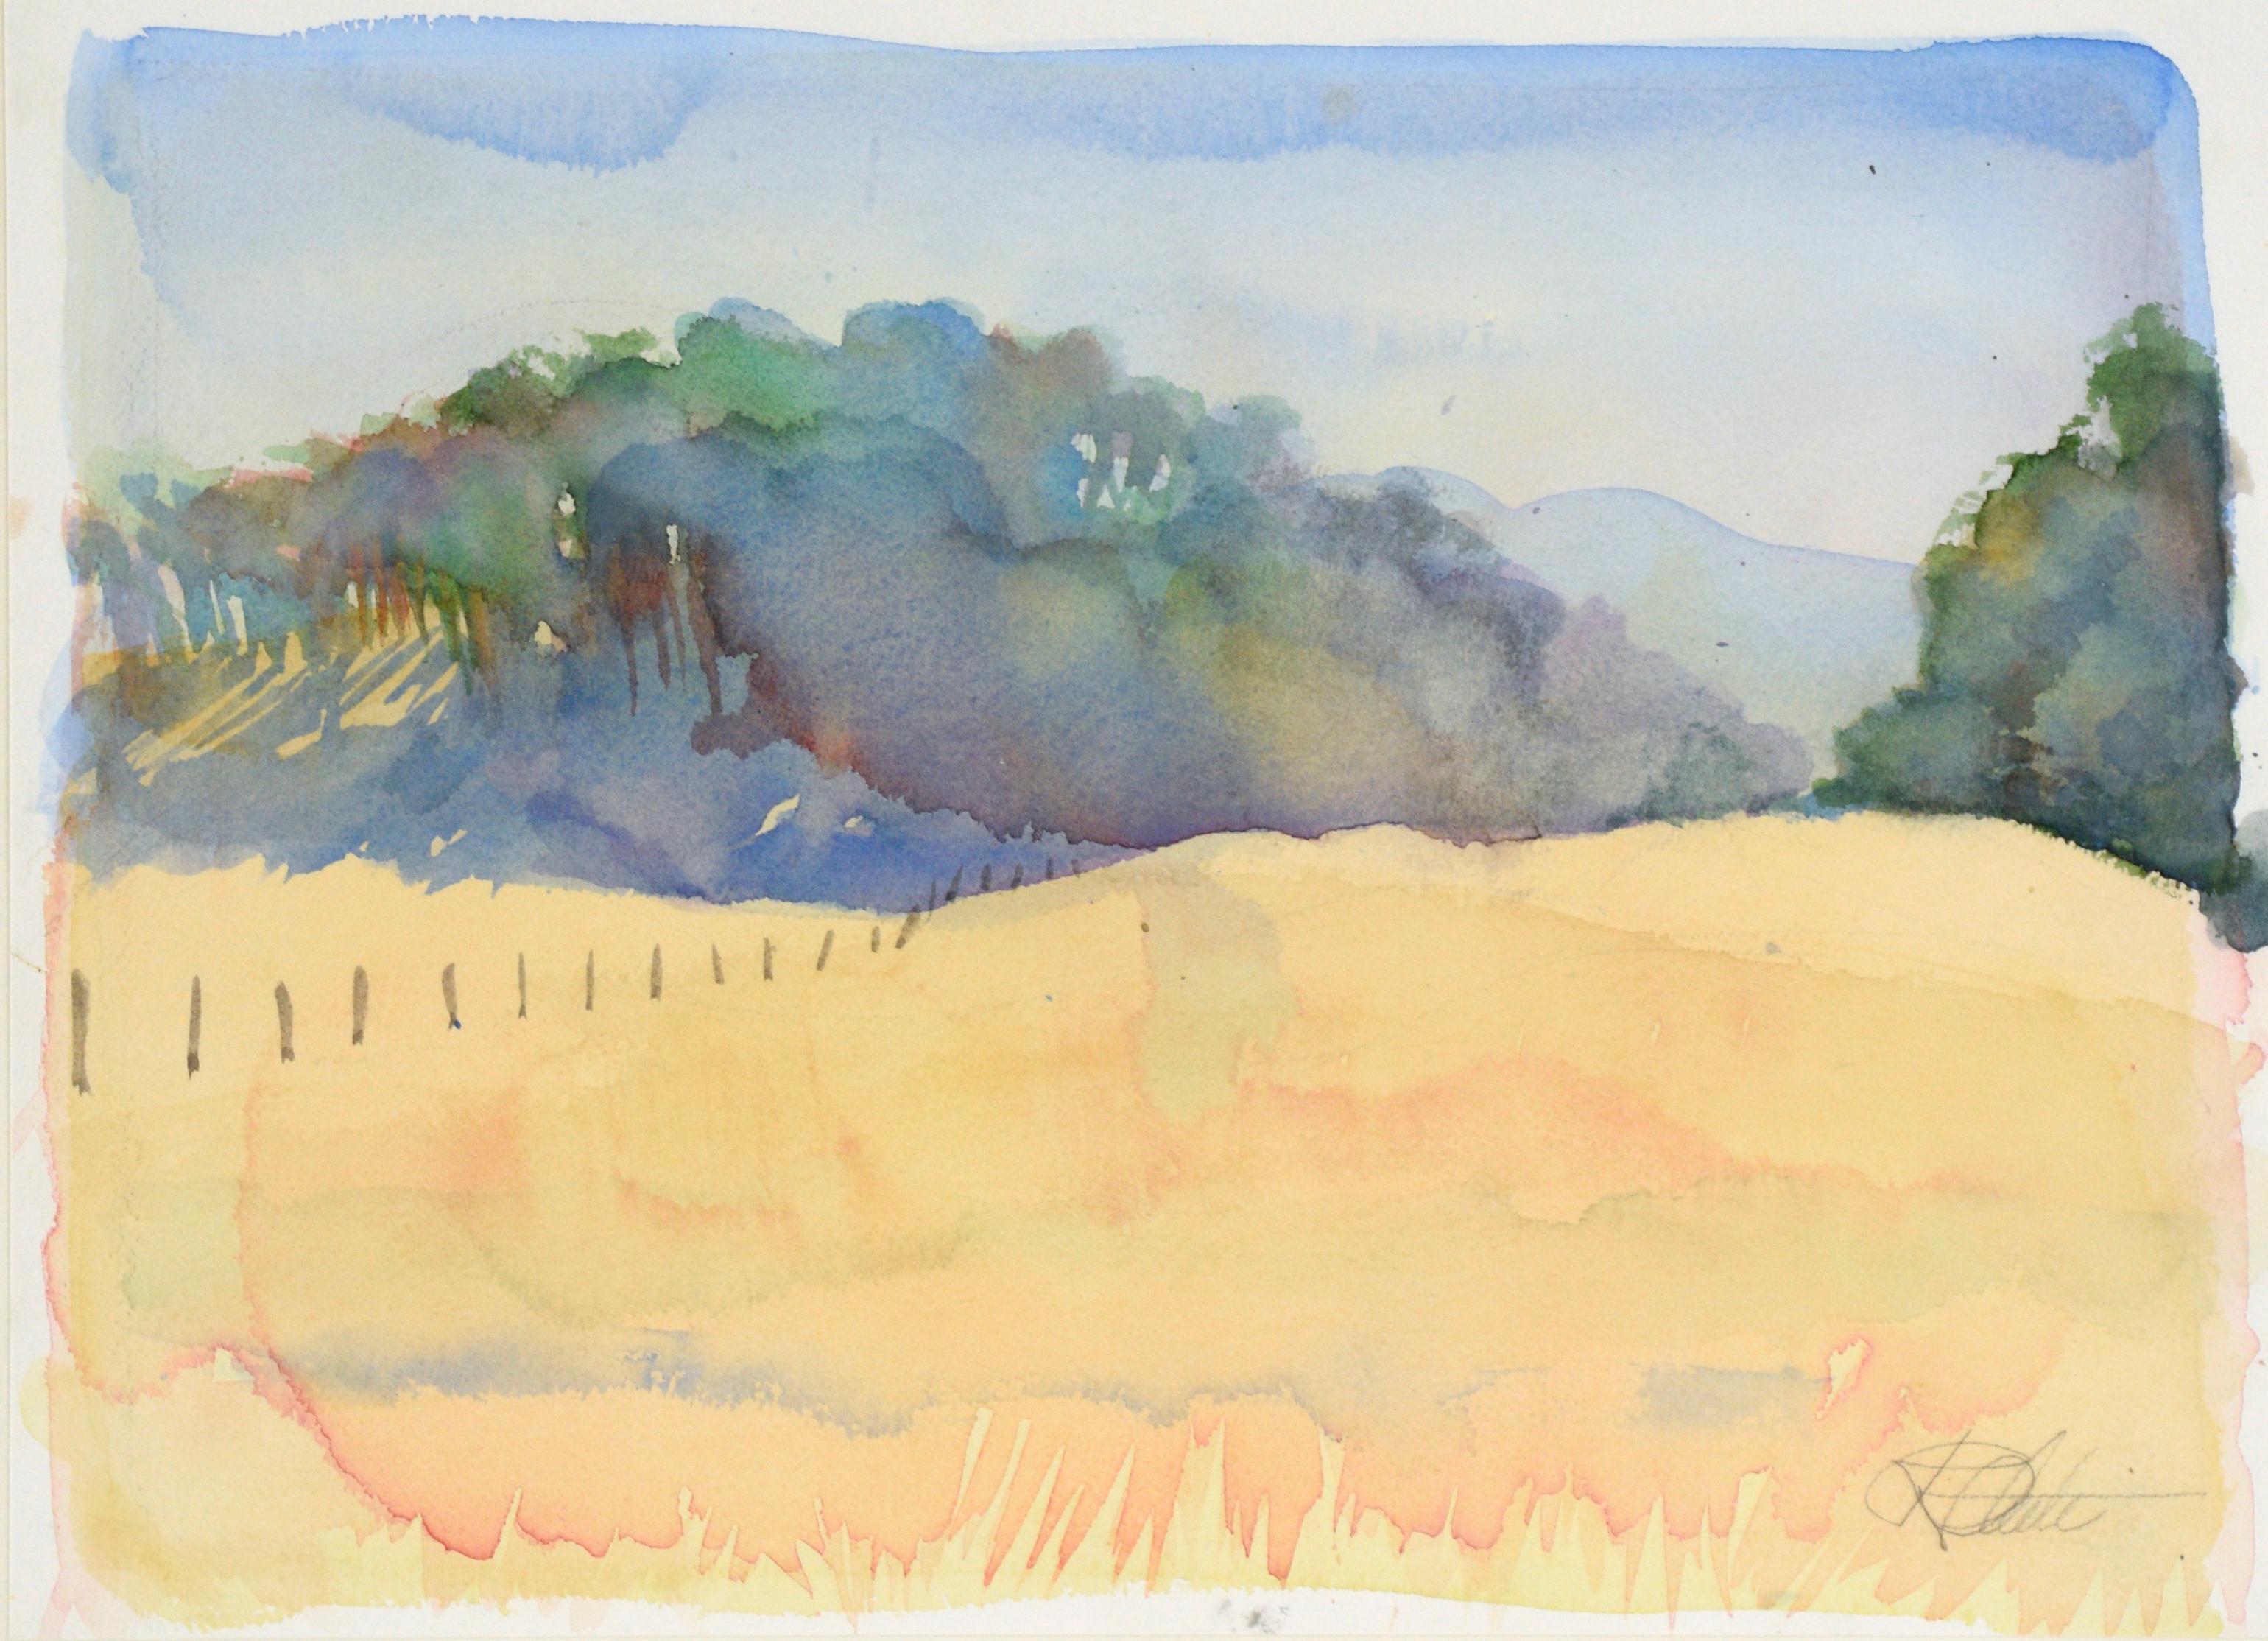 Golden Hills - California Landscape in Watercolor on Paper - Painting by Robert Gantt Steele